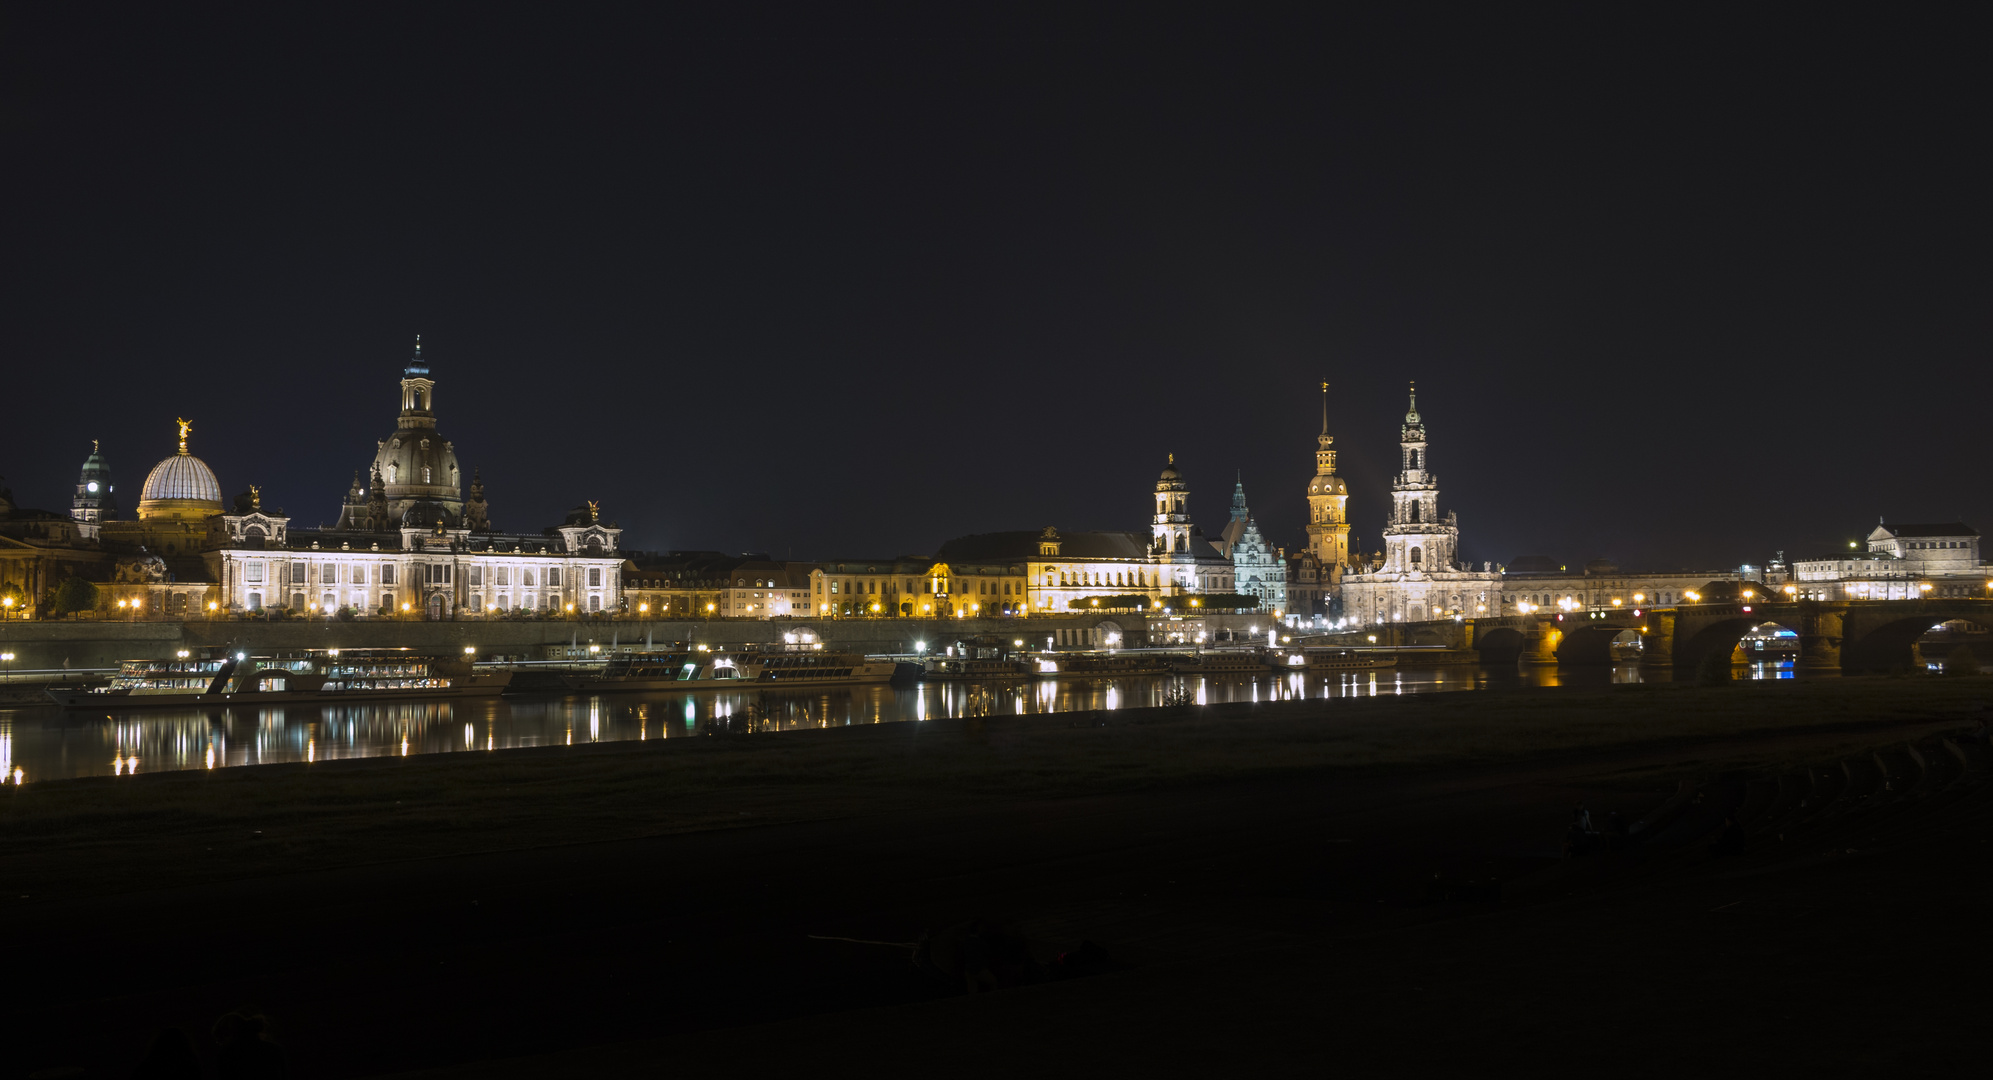 Dresden by night (Dresden classics)